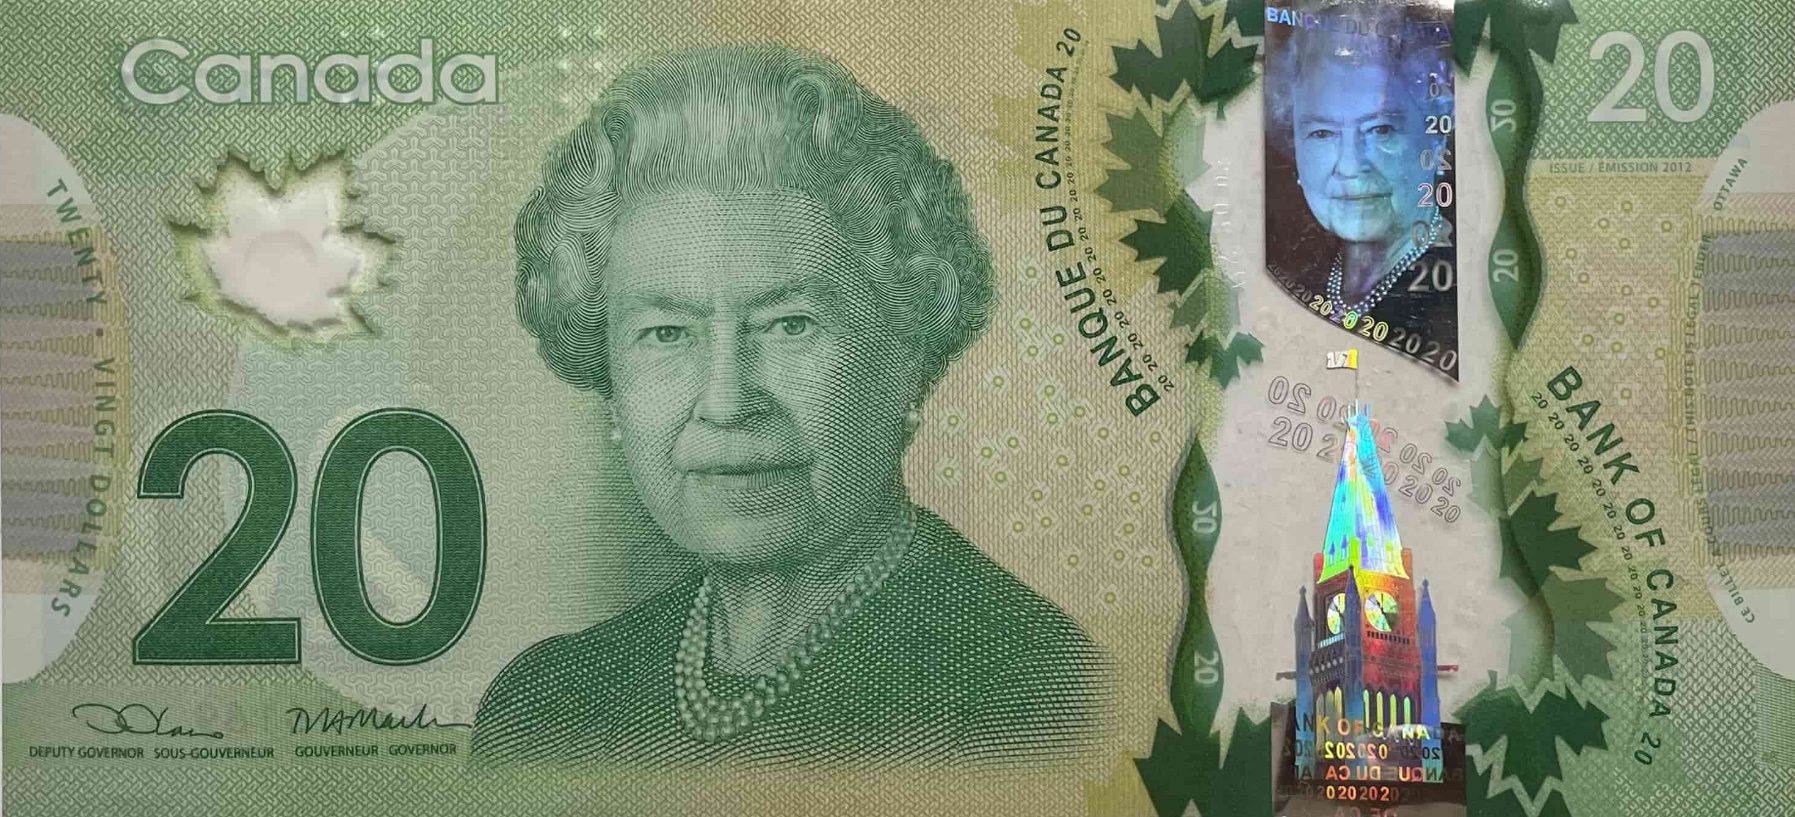 Canada New Signature Dollar Note B C Confirmed Banknotenews